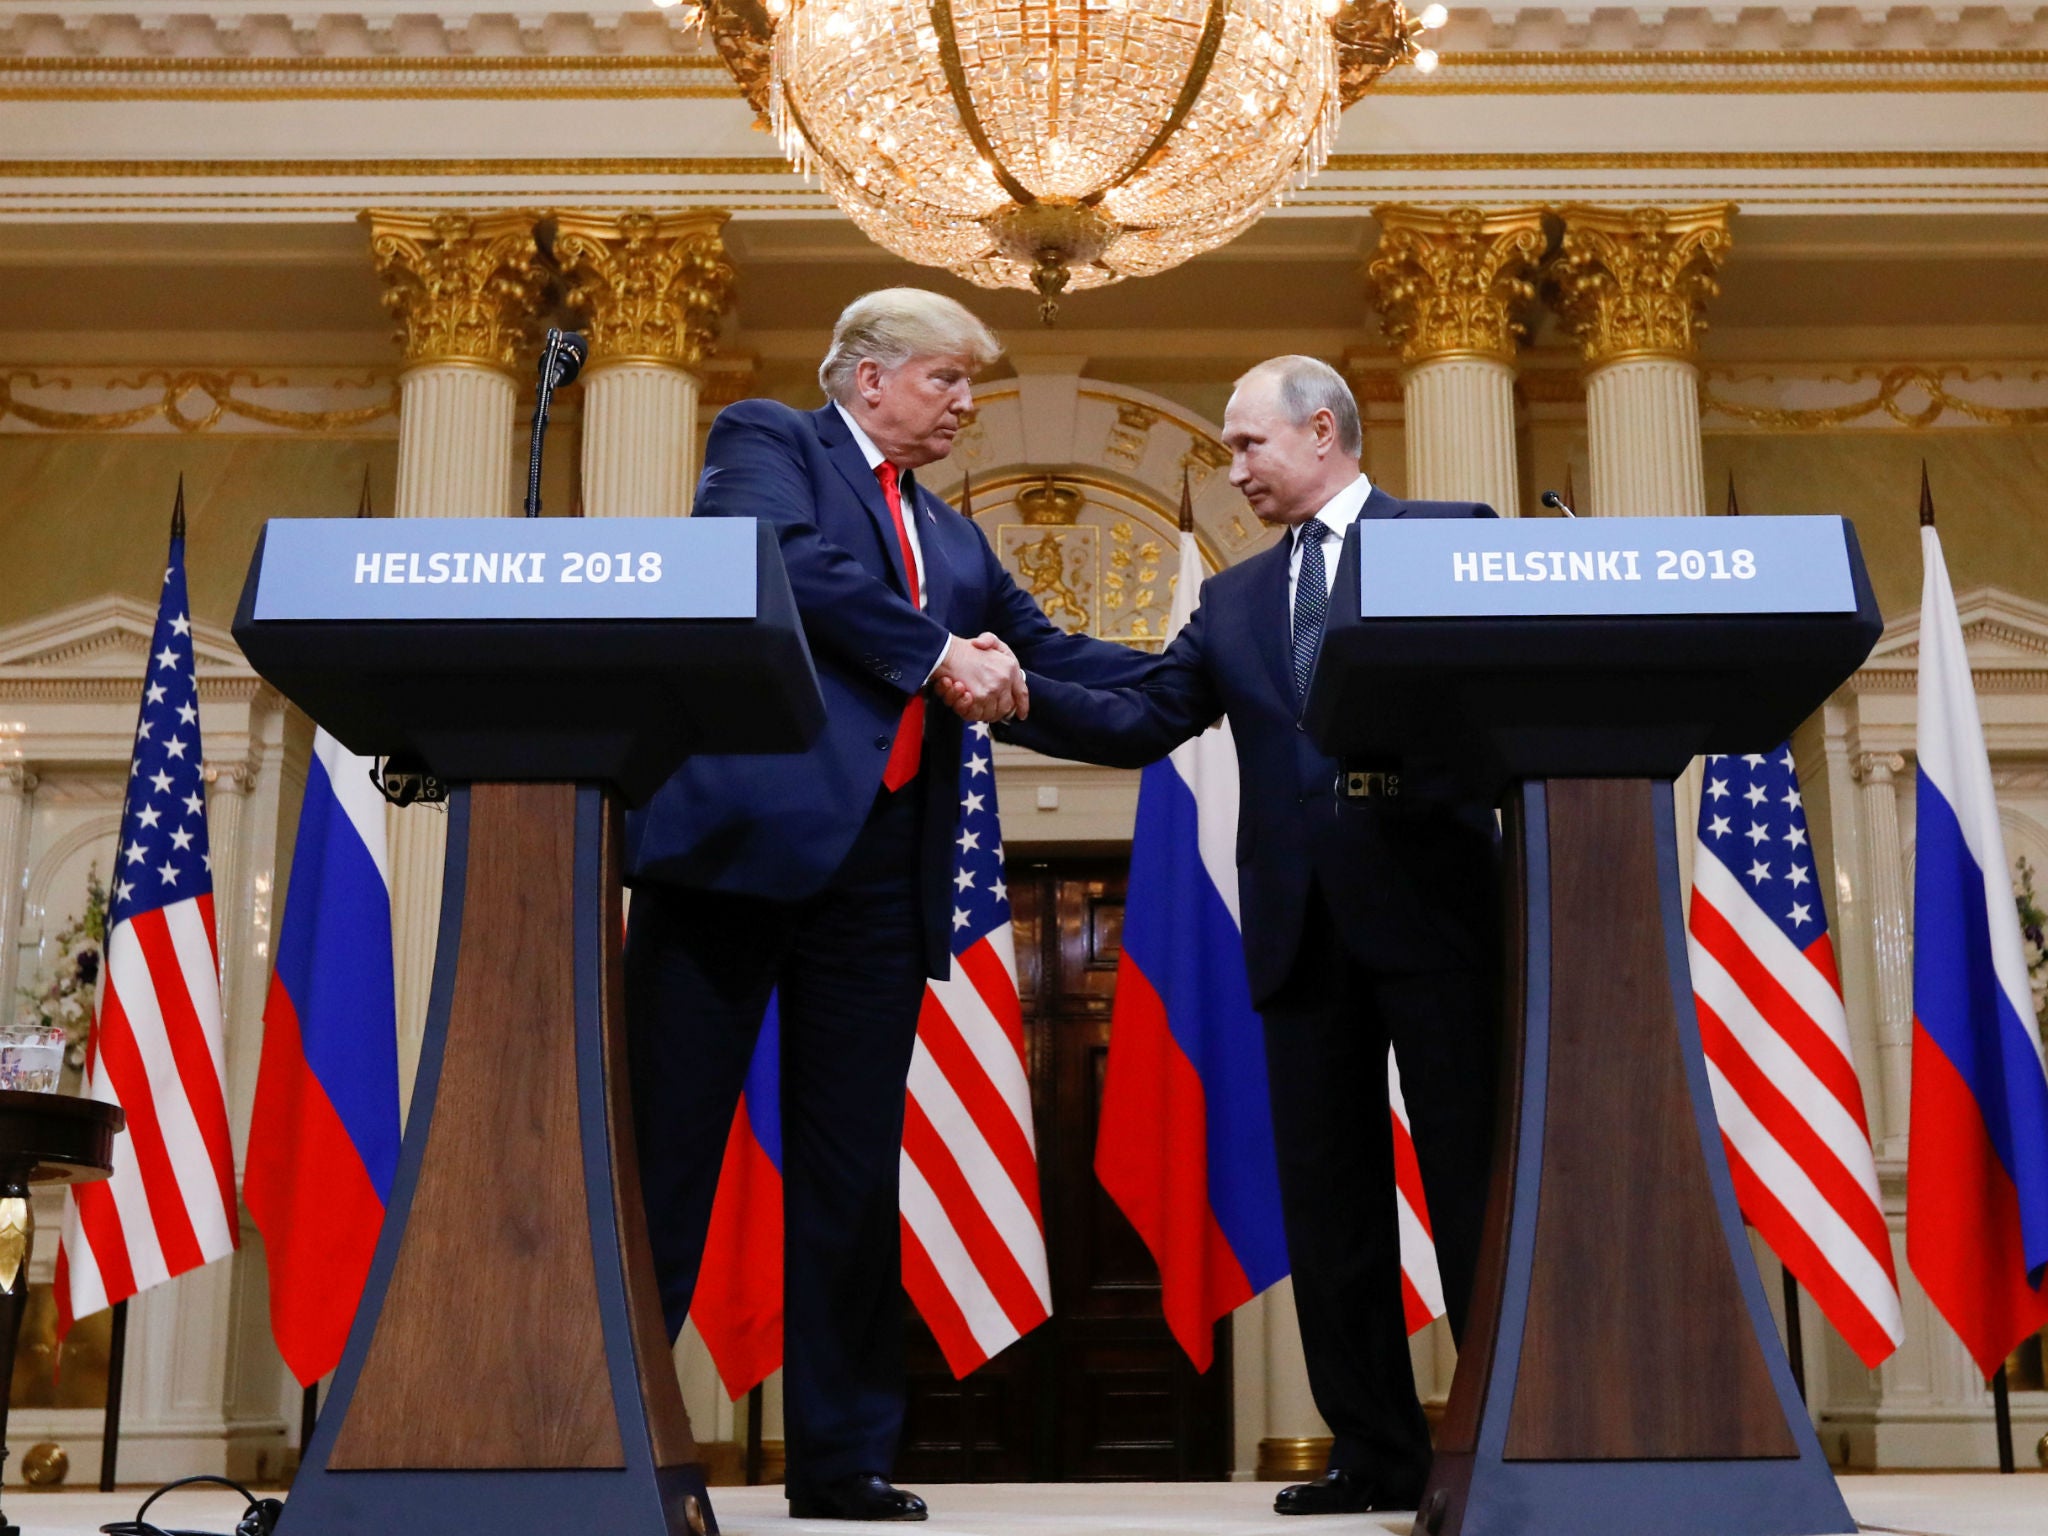 Trump and Putin at the Helsinki summit on 16 July 2018